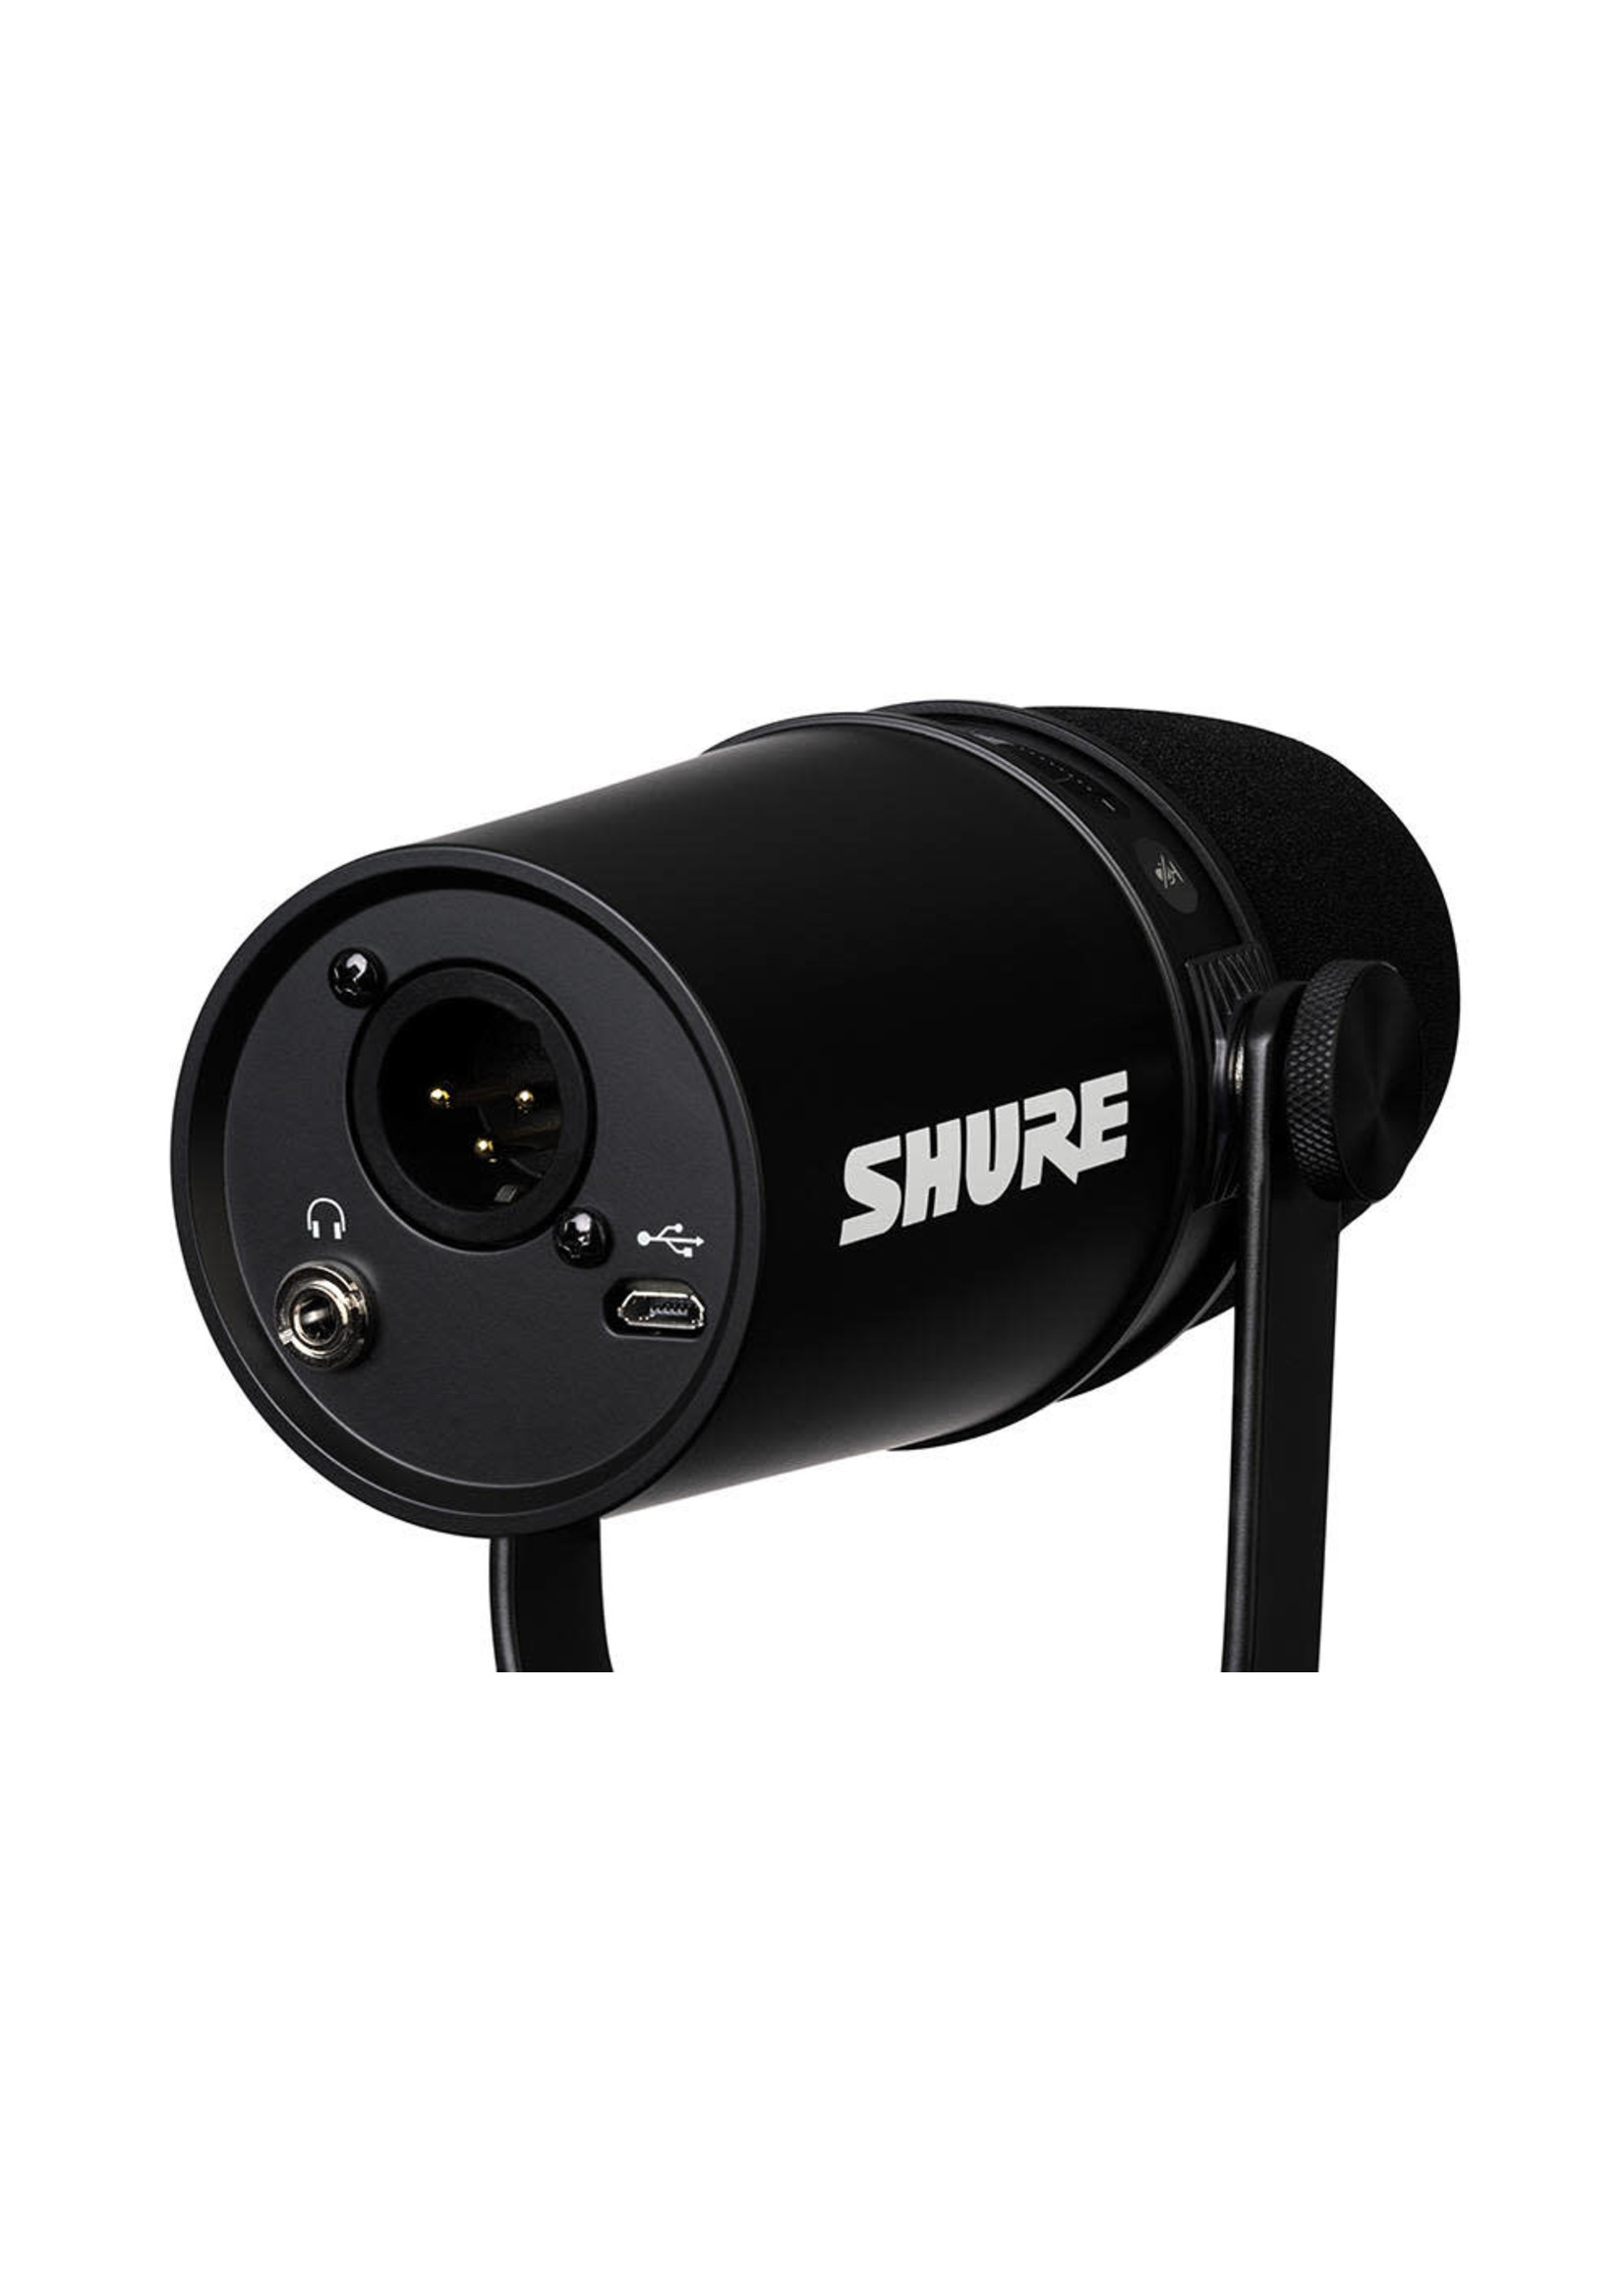 Shure MV7 XLR/USB Dynamic Podcasting Microphone - Black - The Gear Box